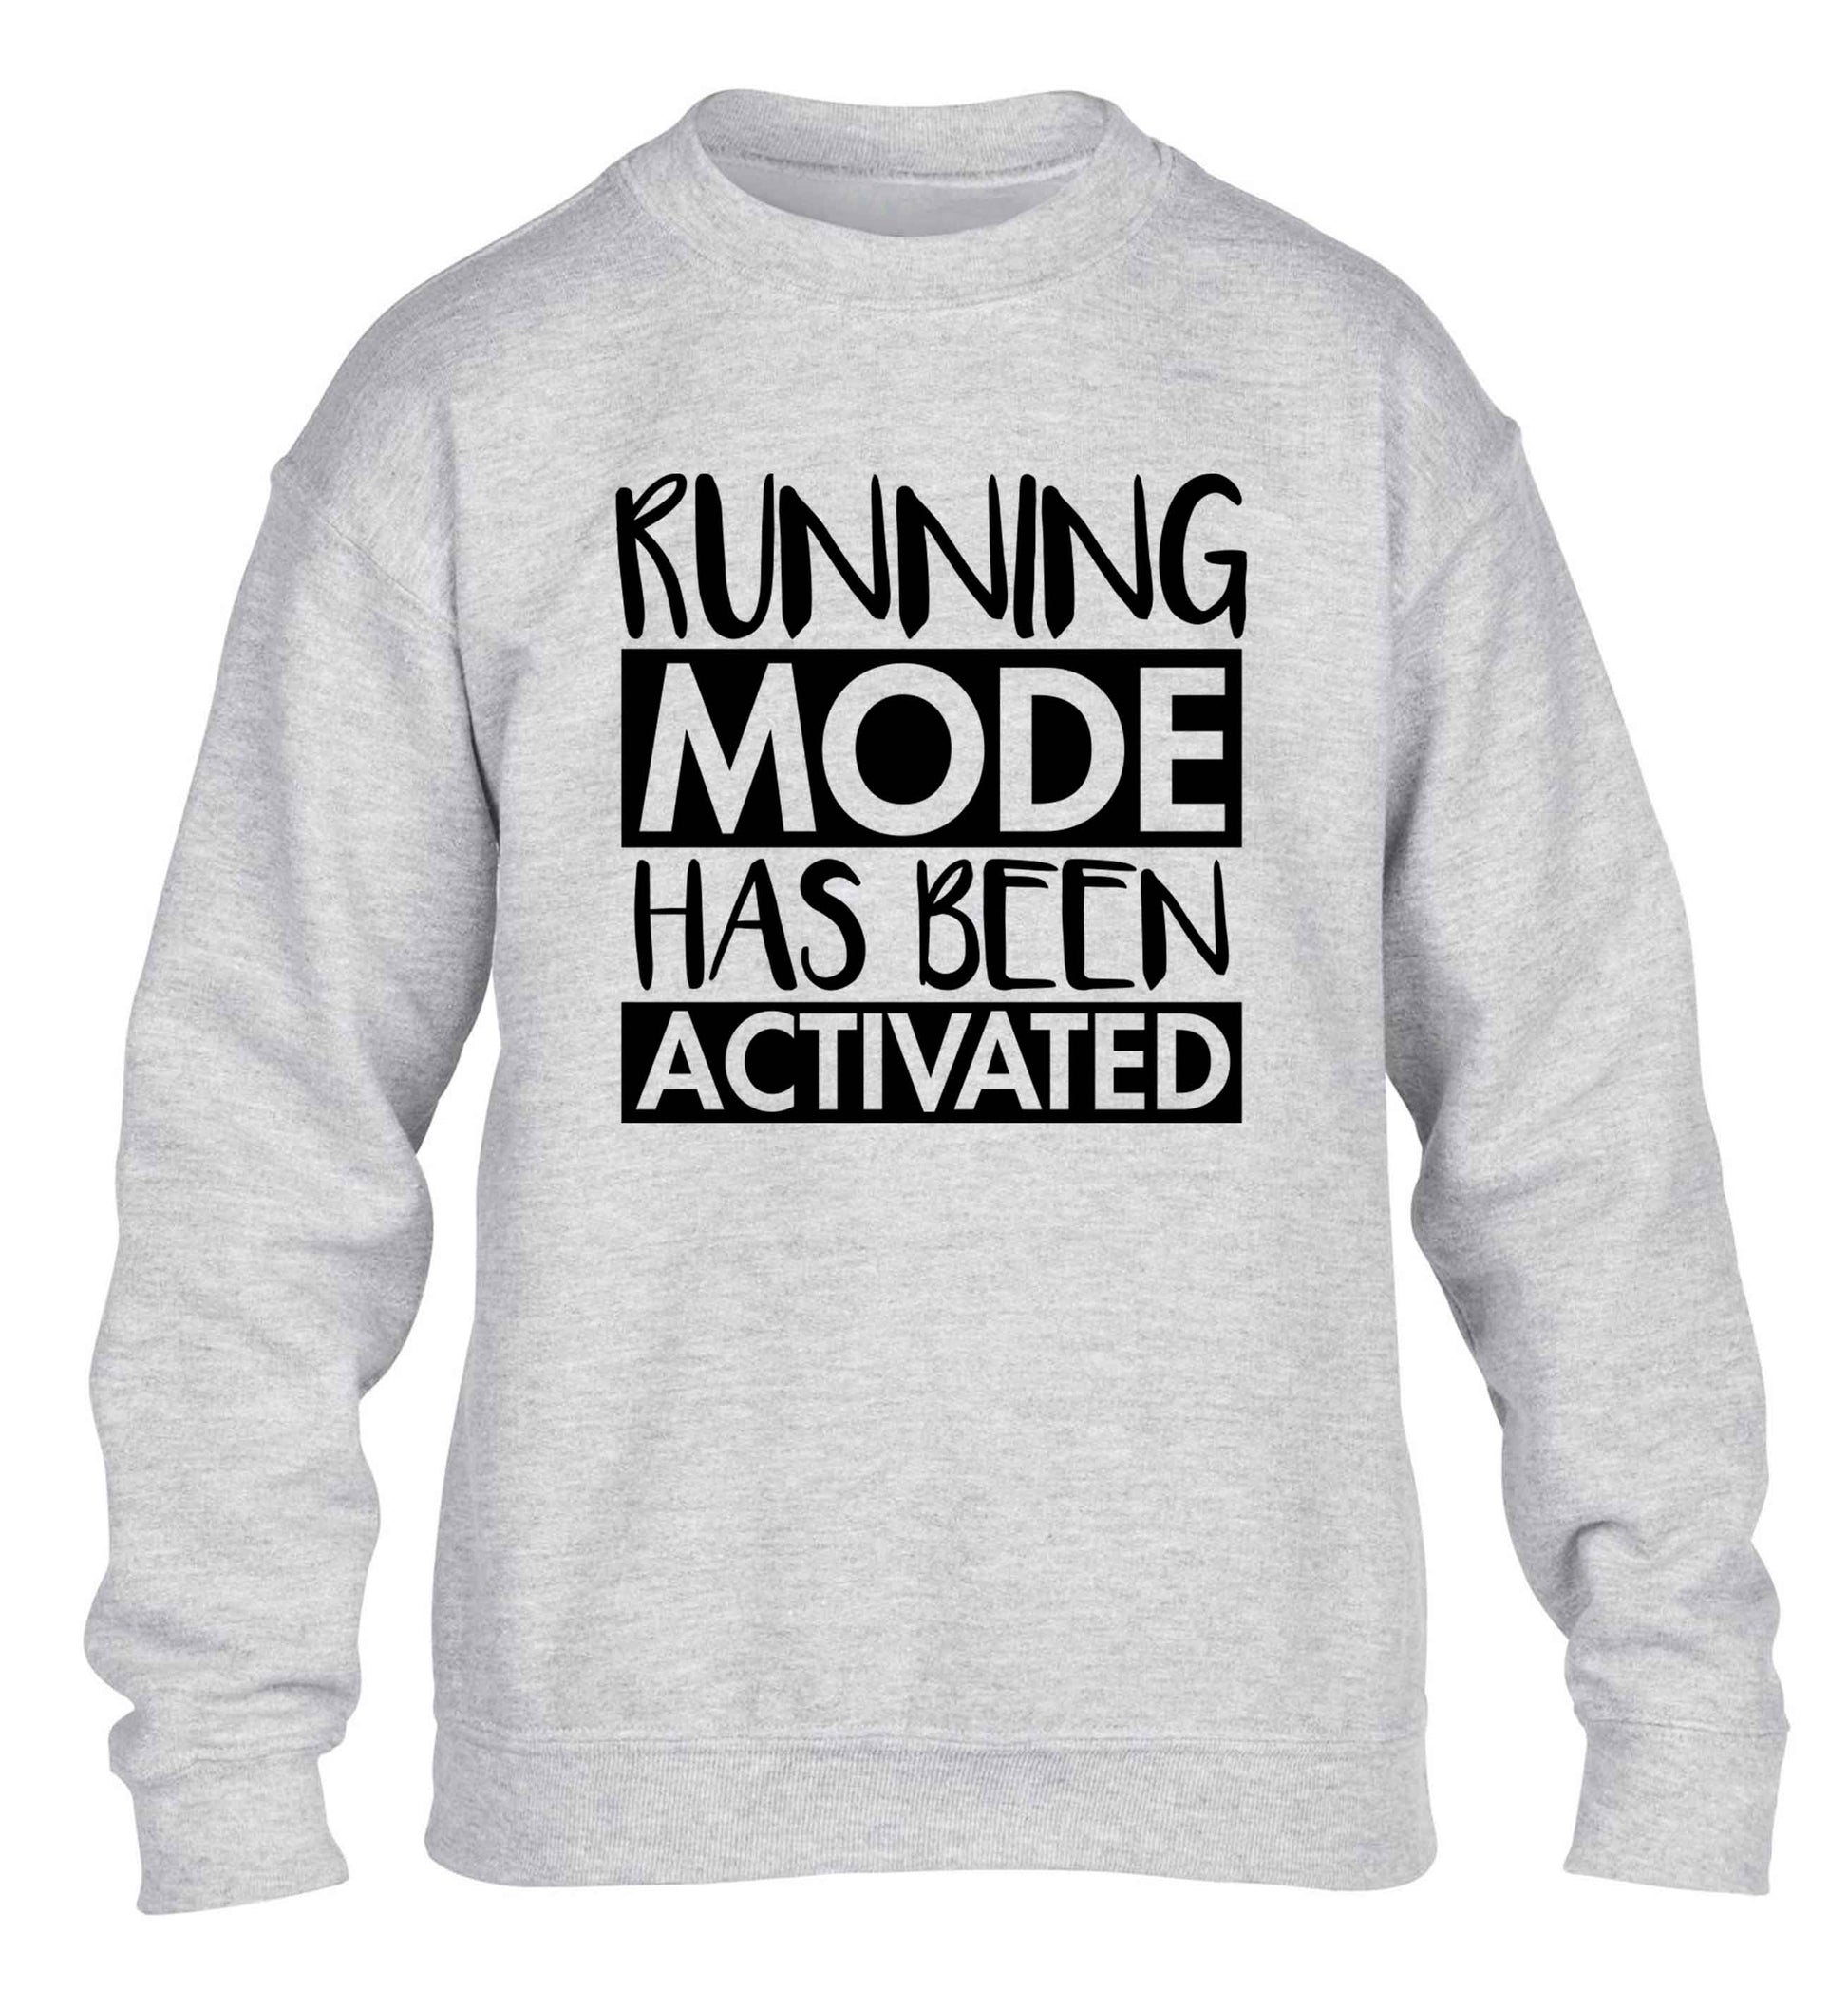 Running mode has been activated children's grey sweater 12-13 Years